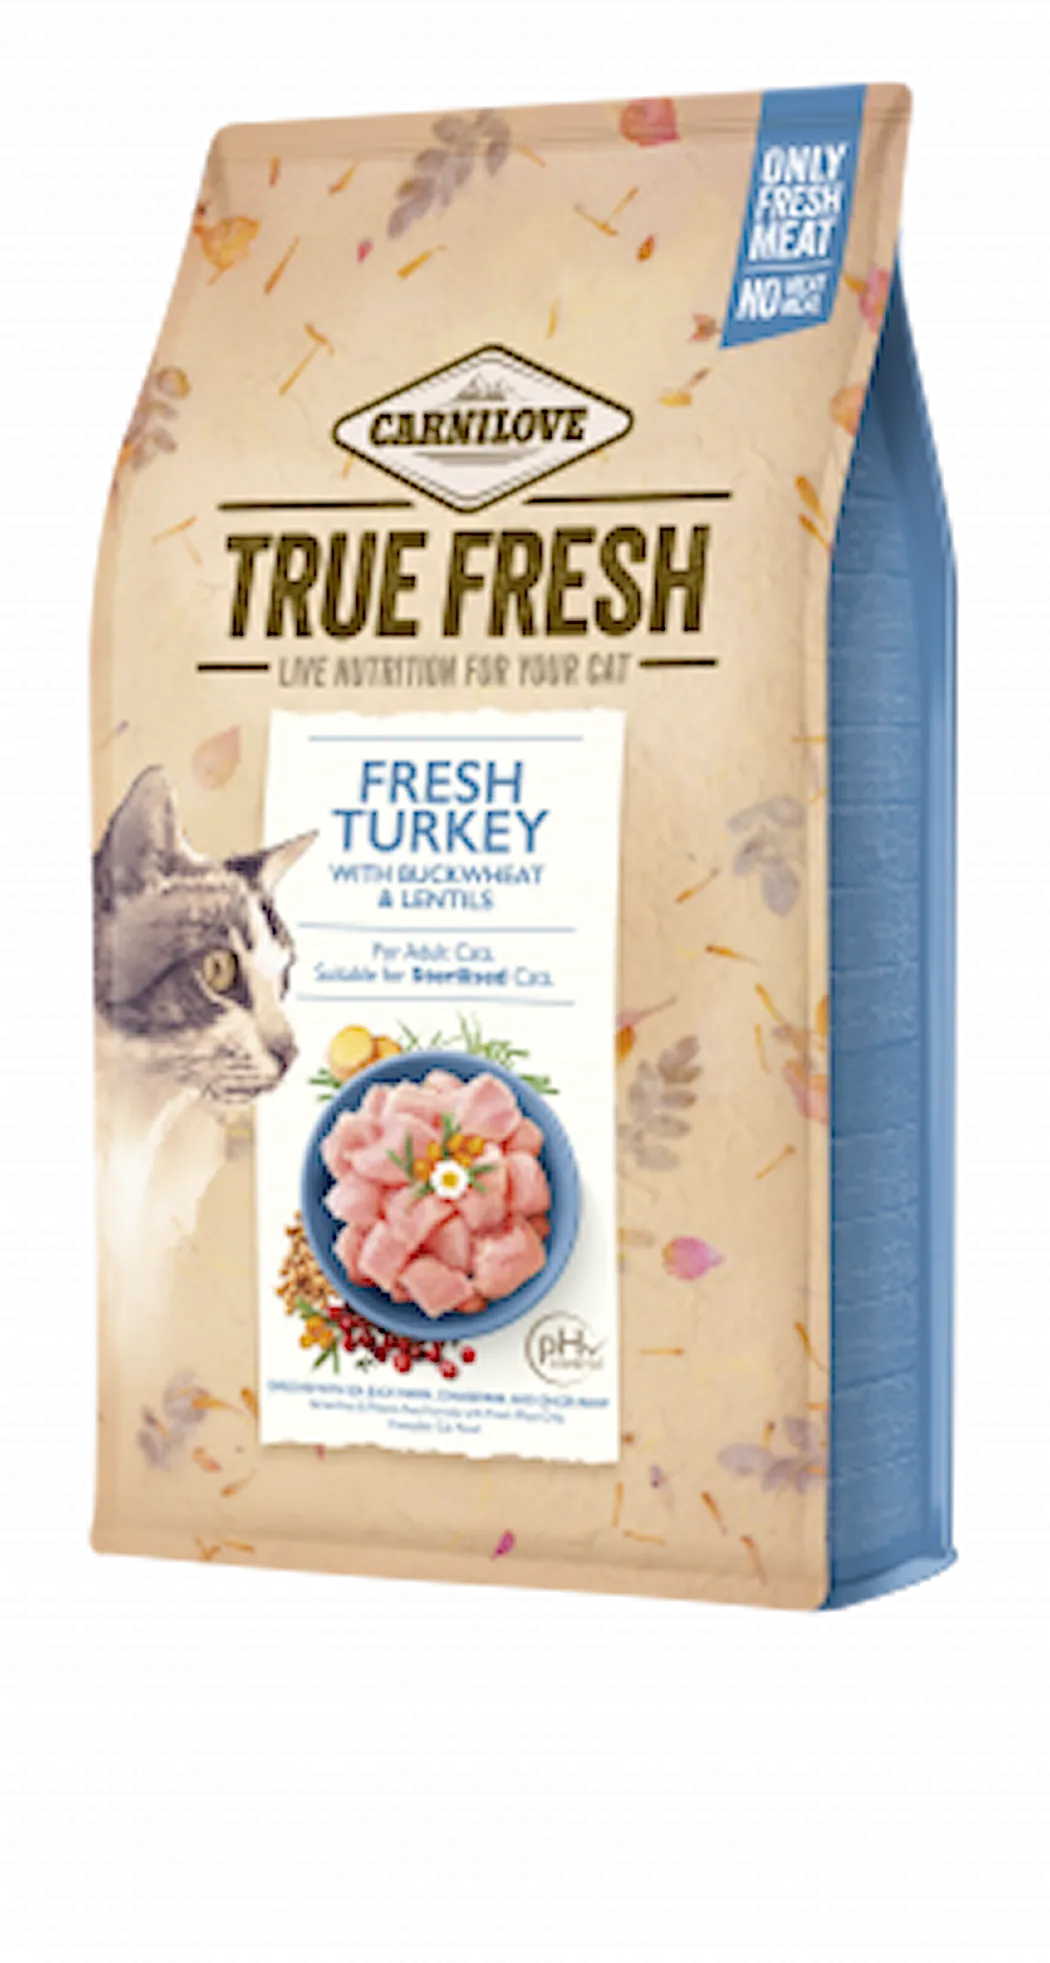 Carnilove True Fresh Cat Turkey